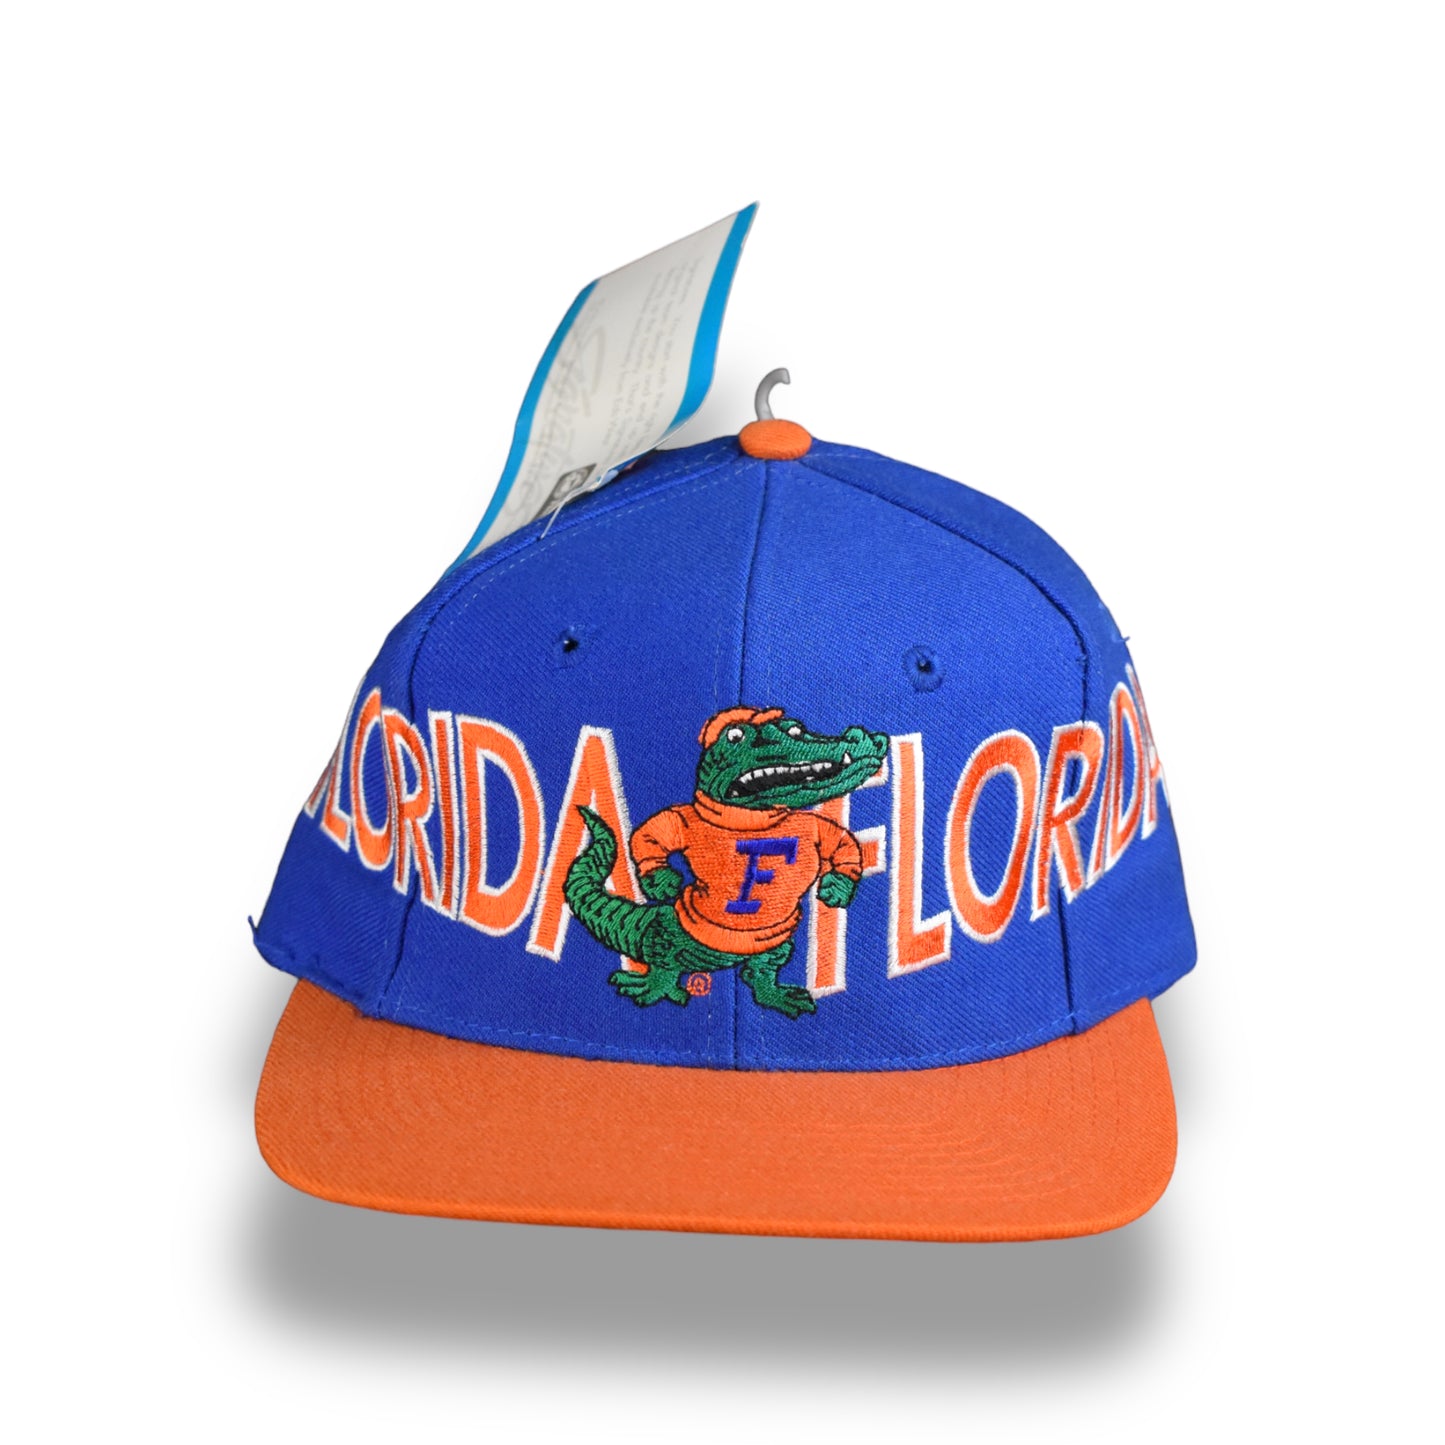 ‘90s Florida Gators Hat